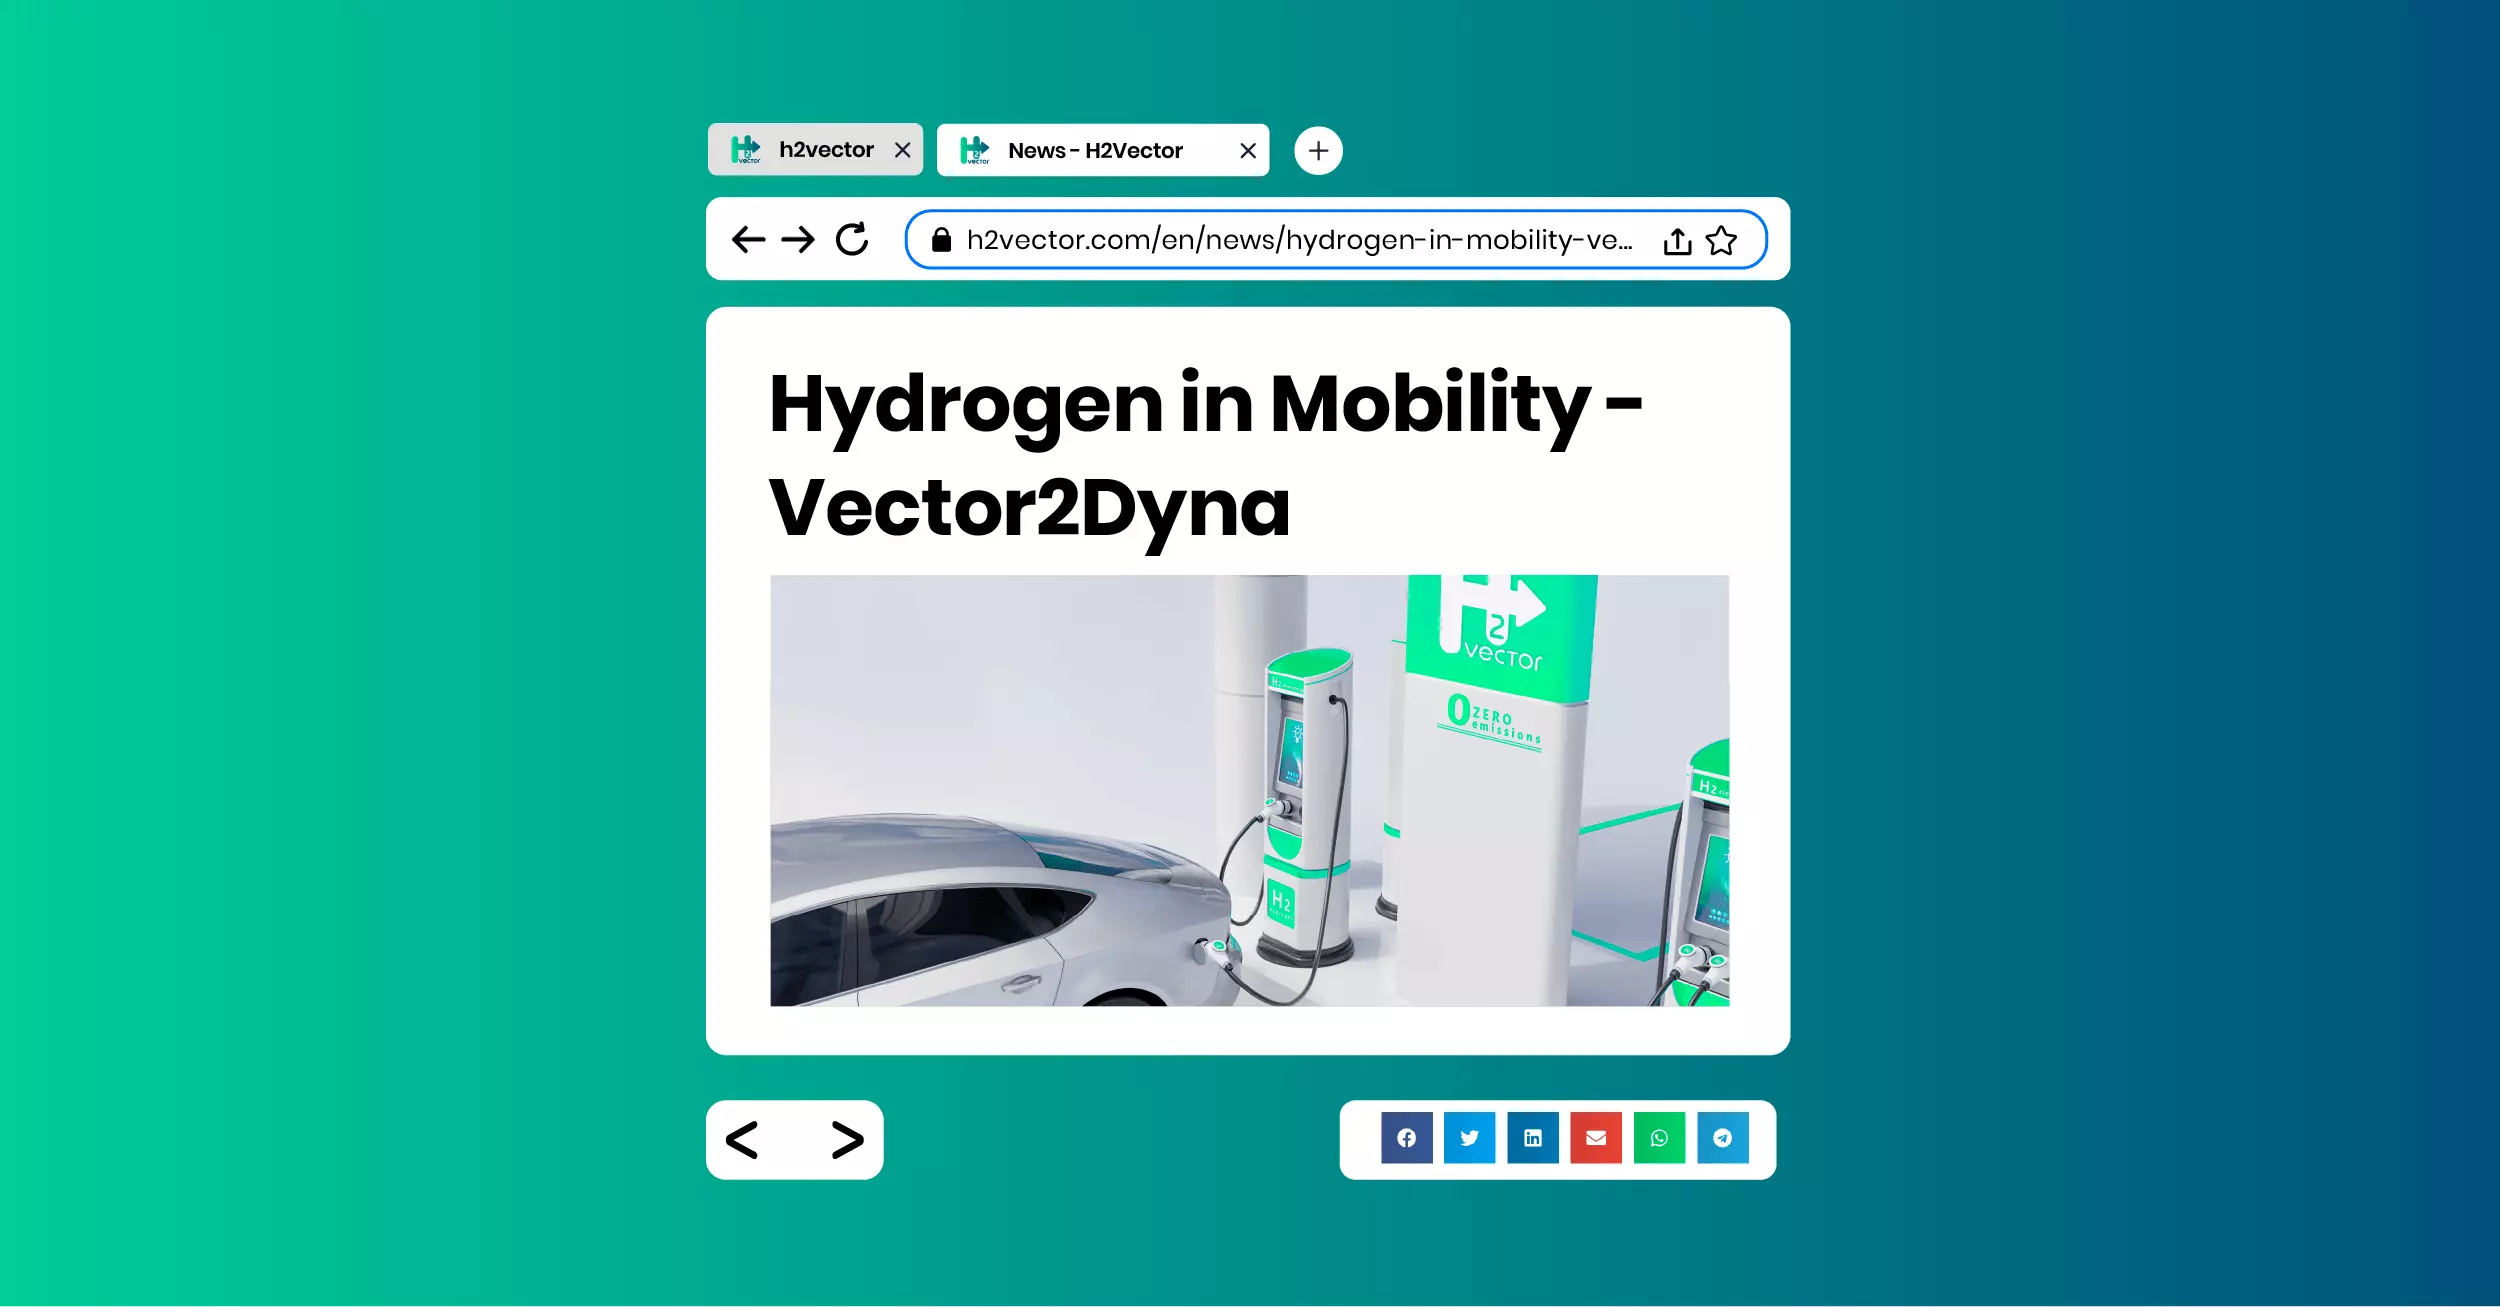 Hydrogen in mobility